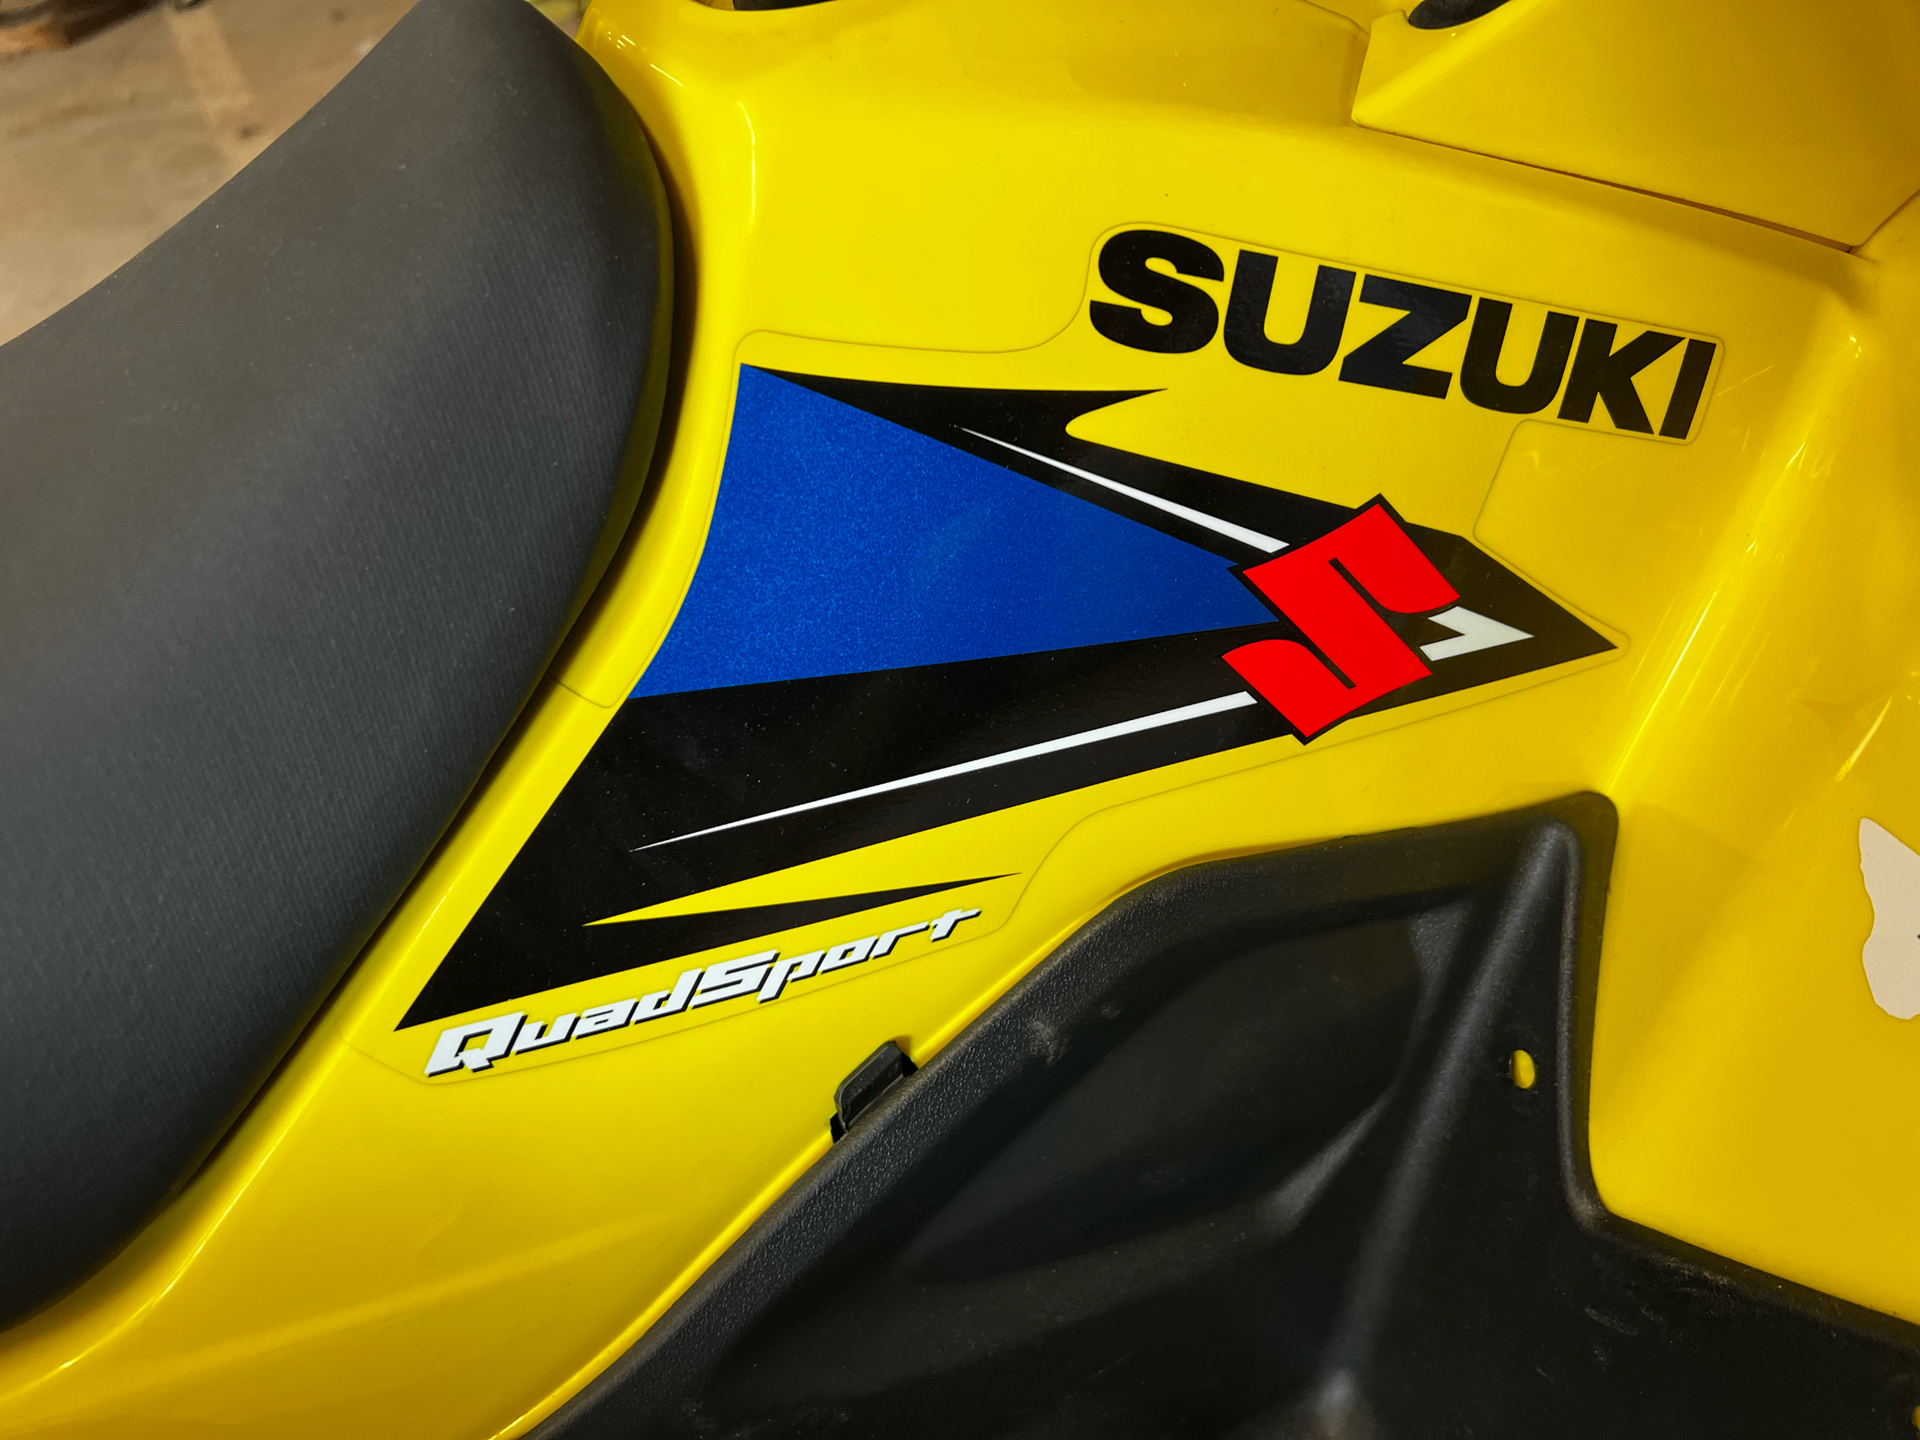 2022 Suzuki QuadSport Z50 in Amarillo, Texas - Photo 5